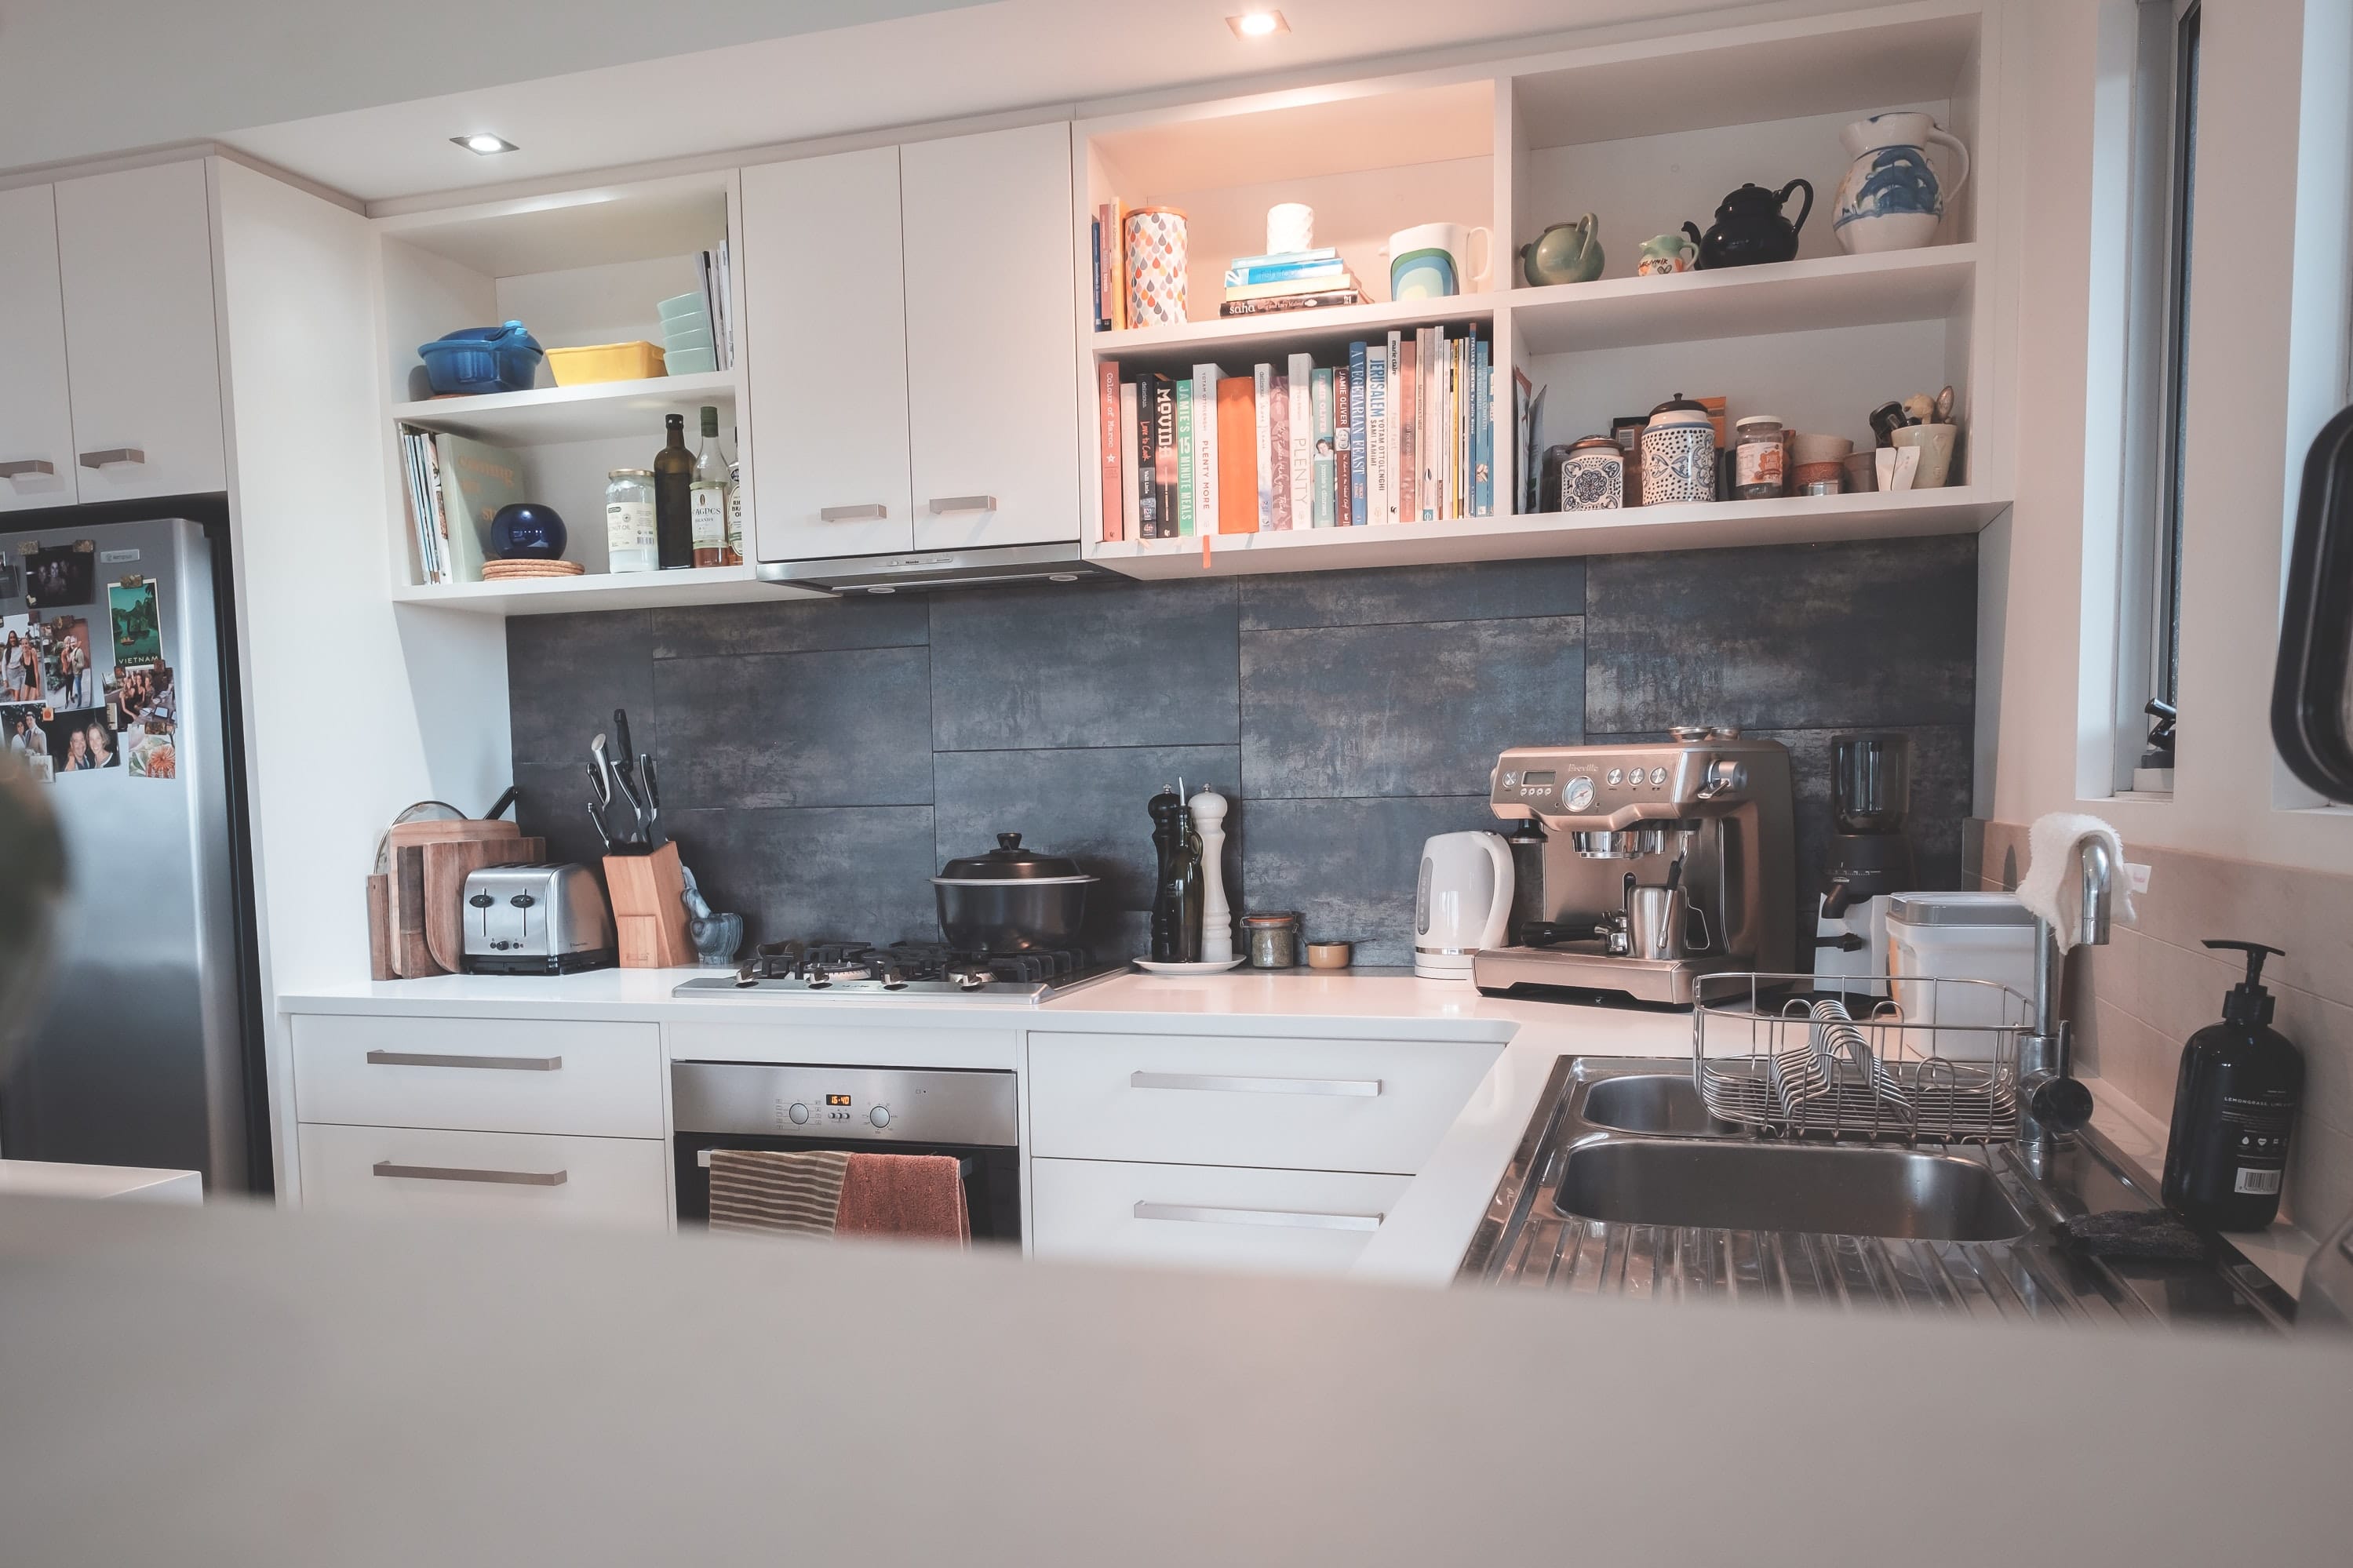 Kitchen with minimalist furniture and modern appliances